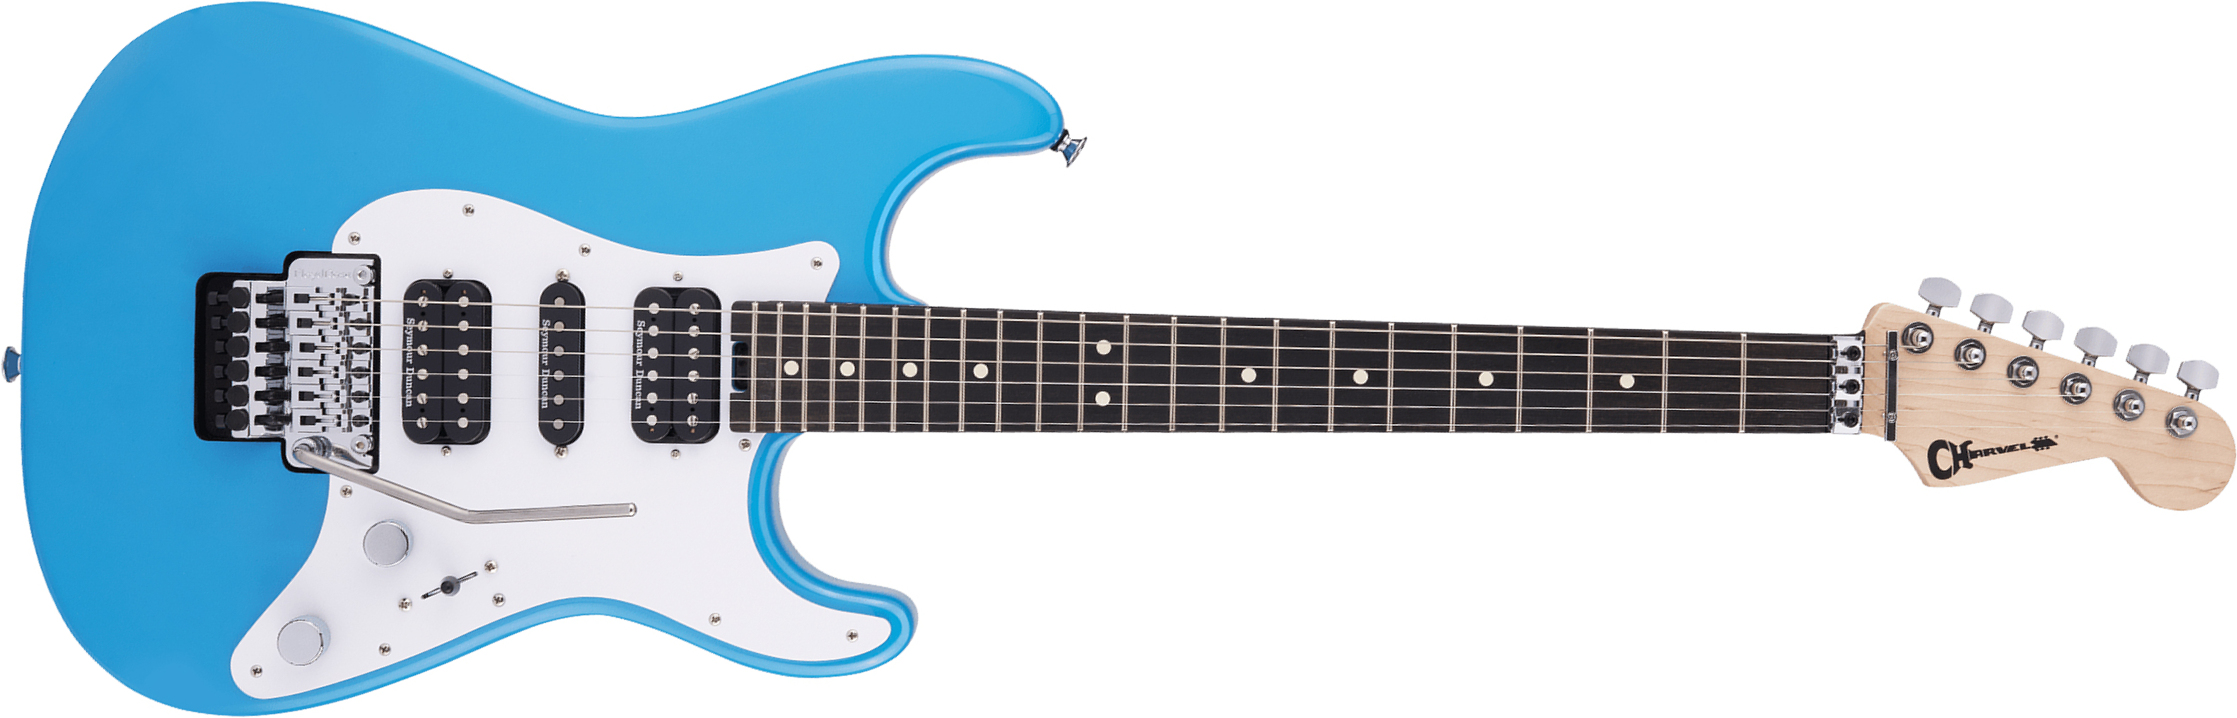 Charvel So-cal Style 1 Hsh Fr E Pro-mod Seymour Duncan Eb - Robbin's Egg Blue - E-Gitarre in Str-Form - Main picture